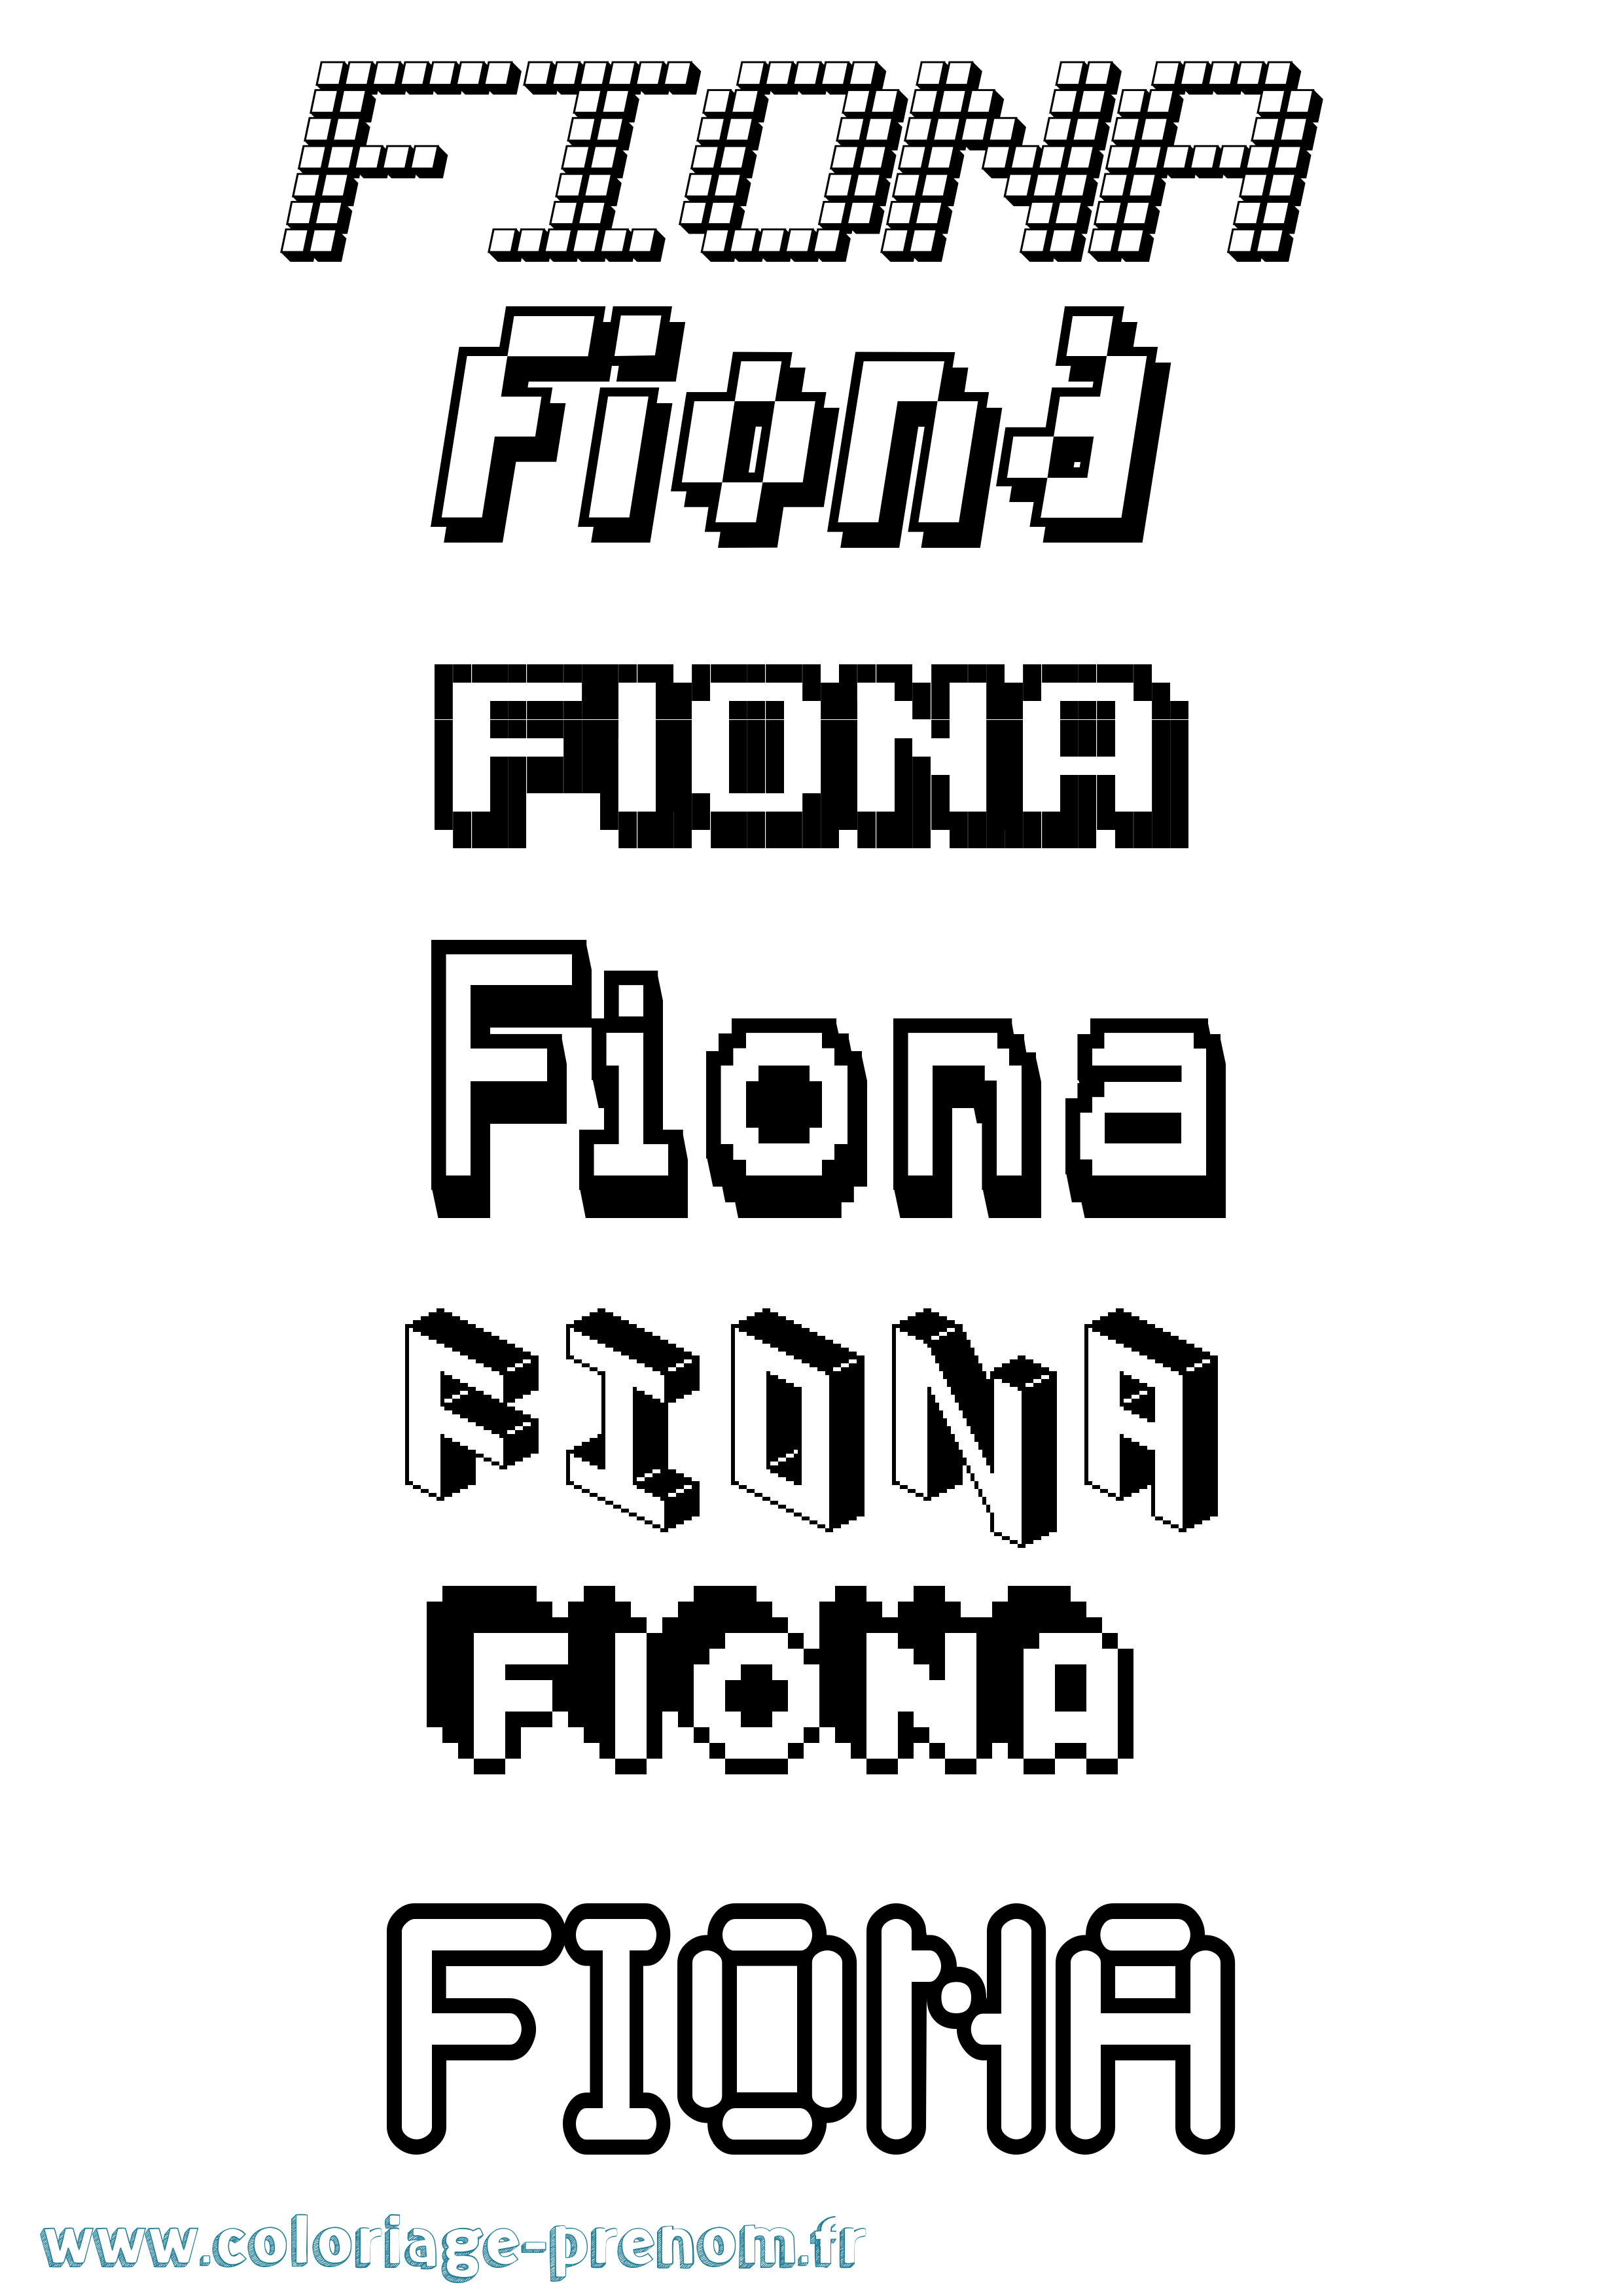 Coloriage prénom Fiona Pixel